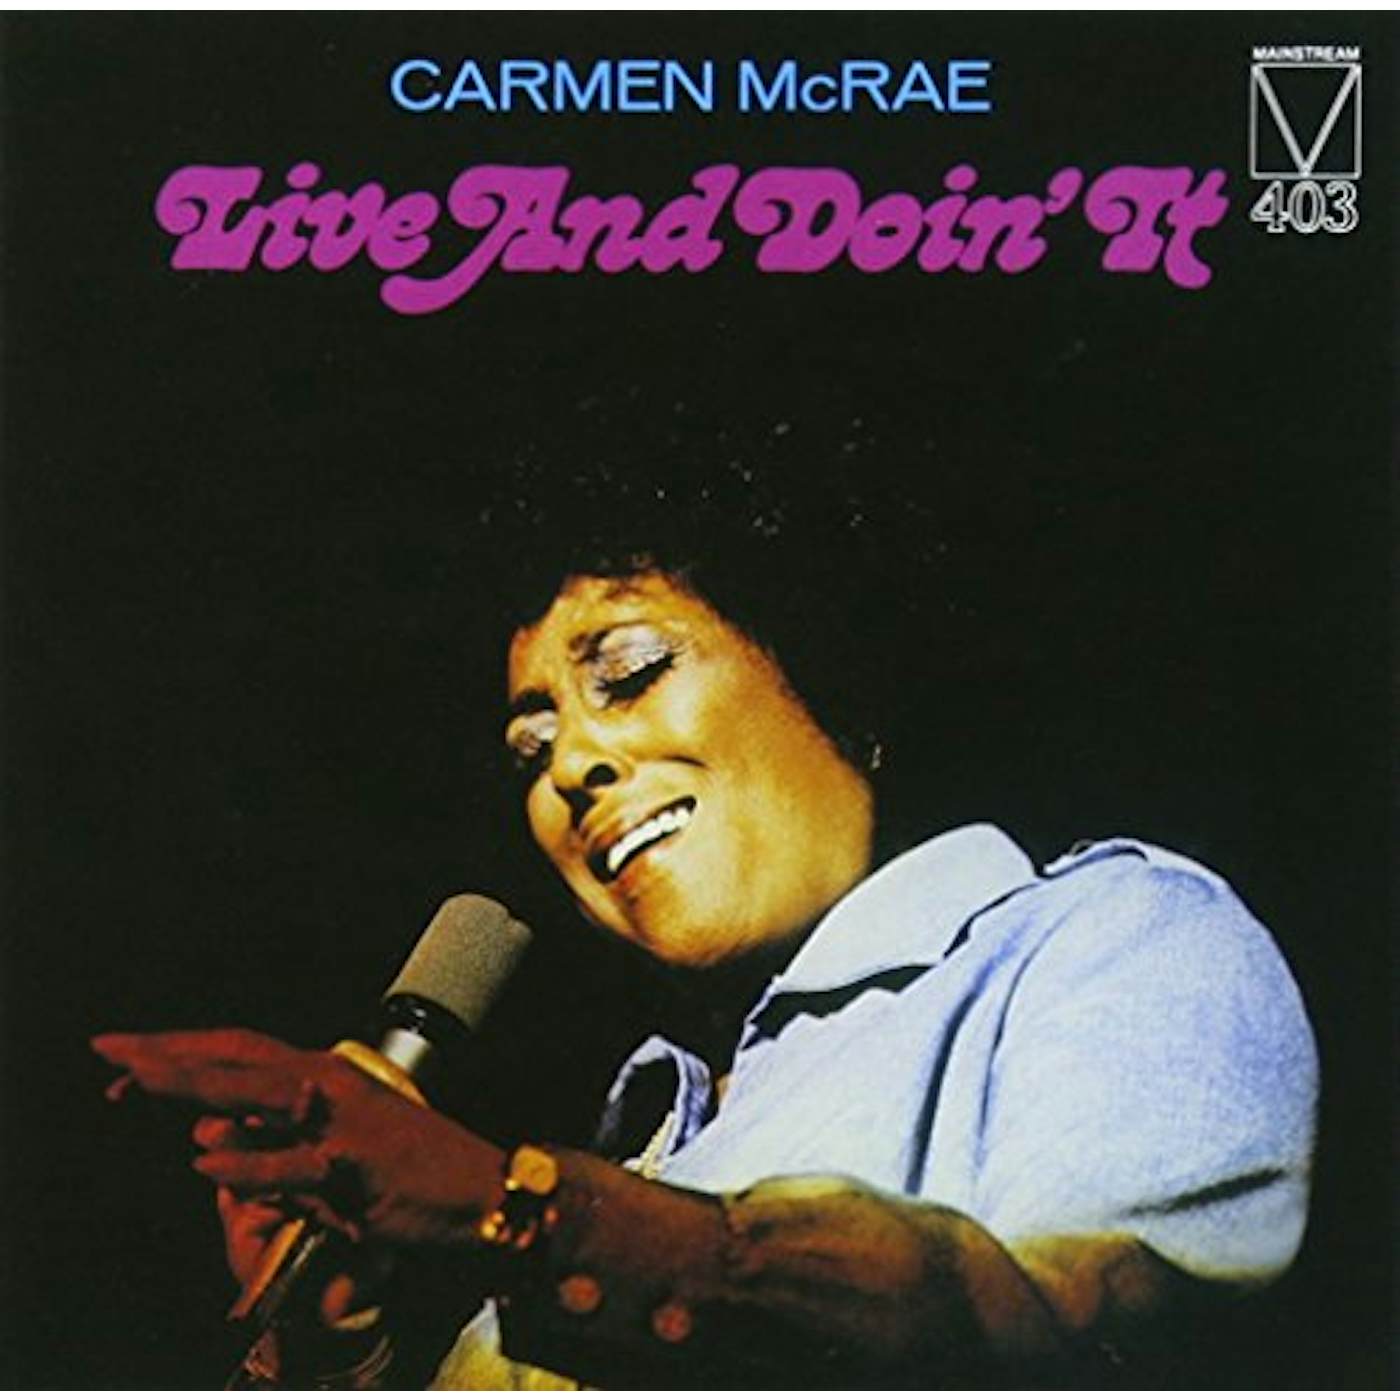 Carmen McRae LIVE & DOIN IT CD